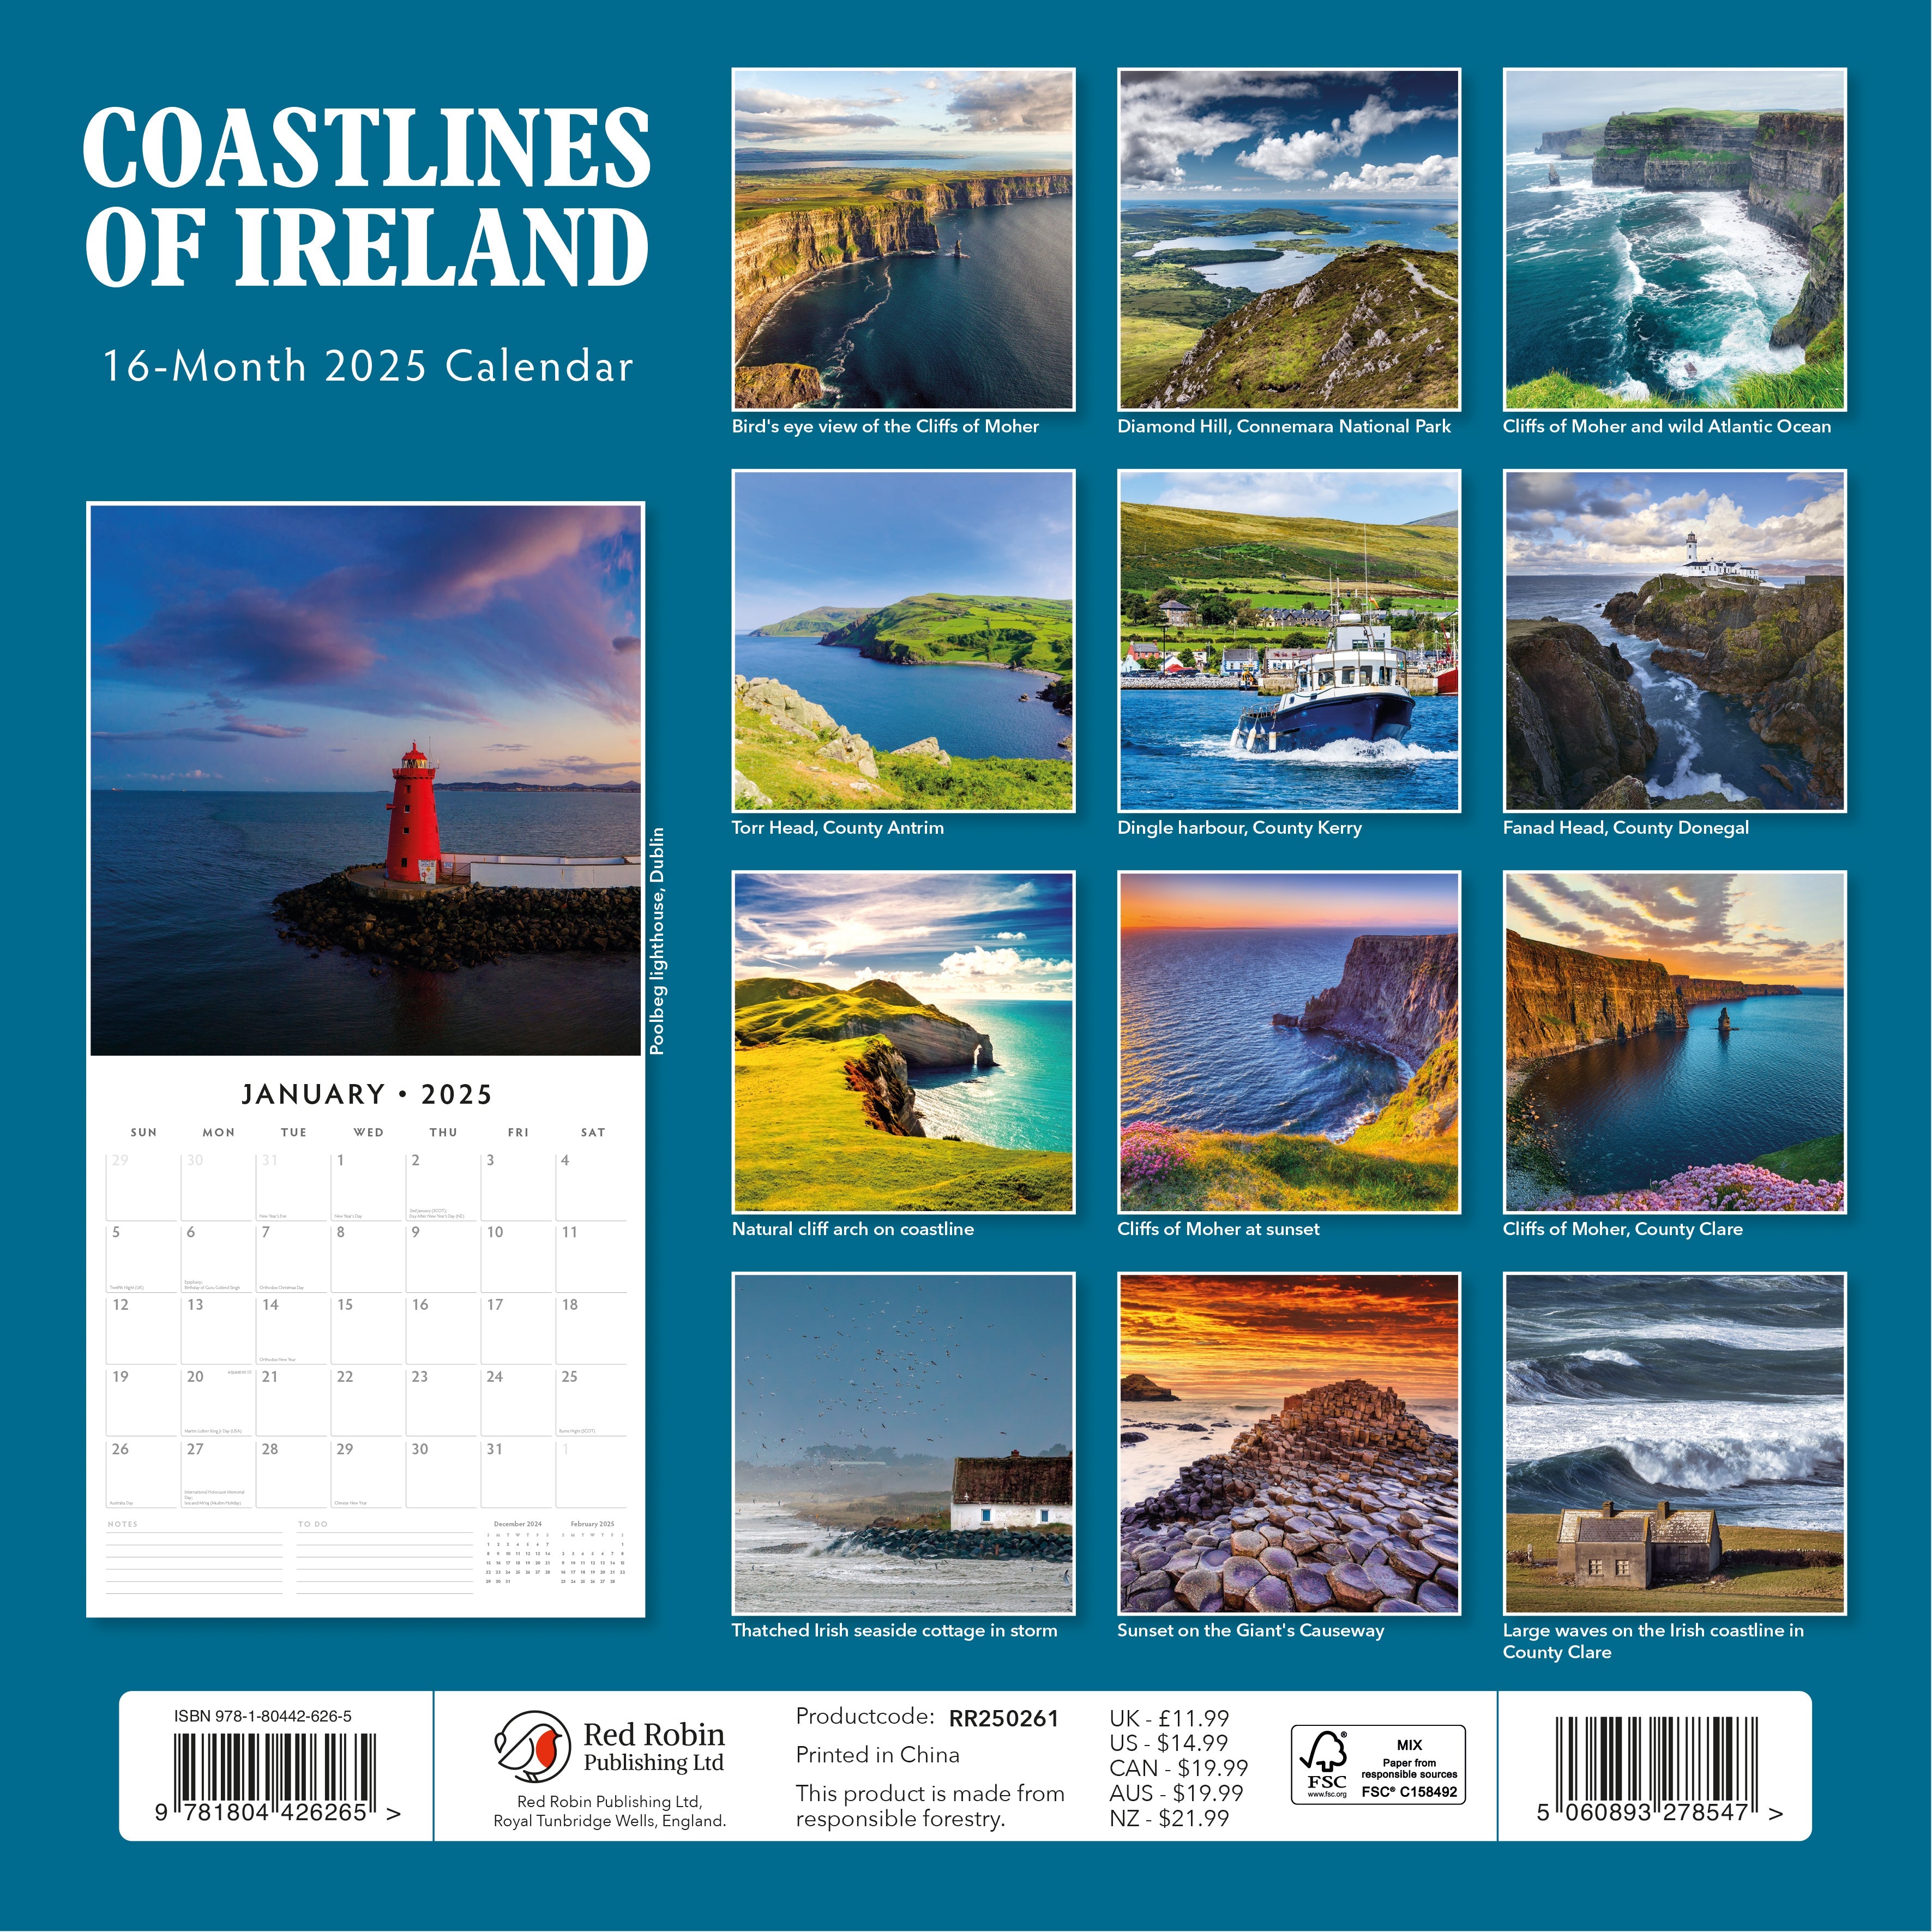 2025 Coastlines of Ireland - Square Wall Calendar